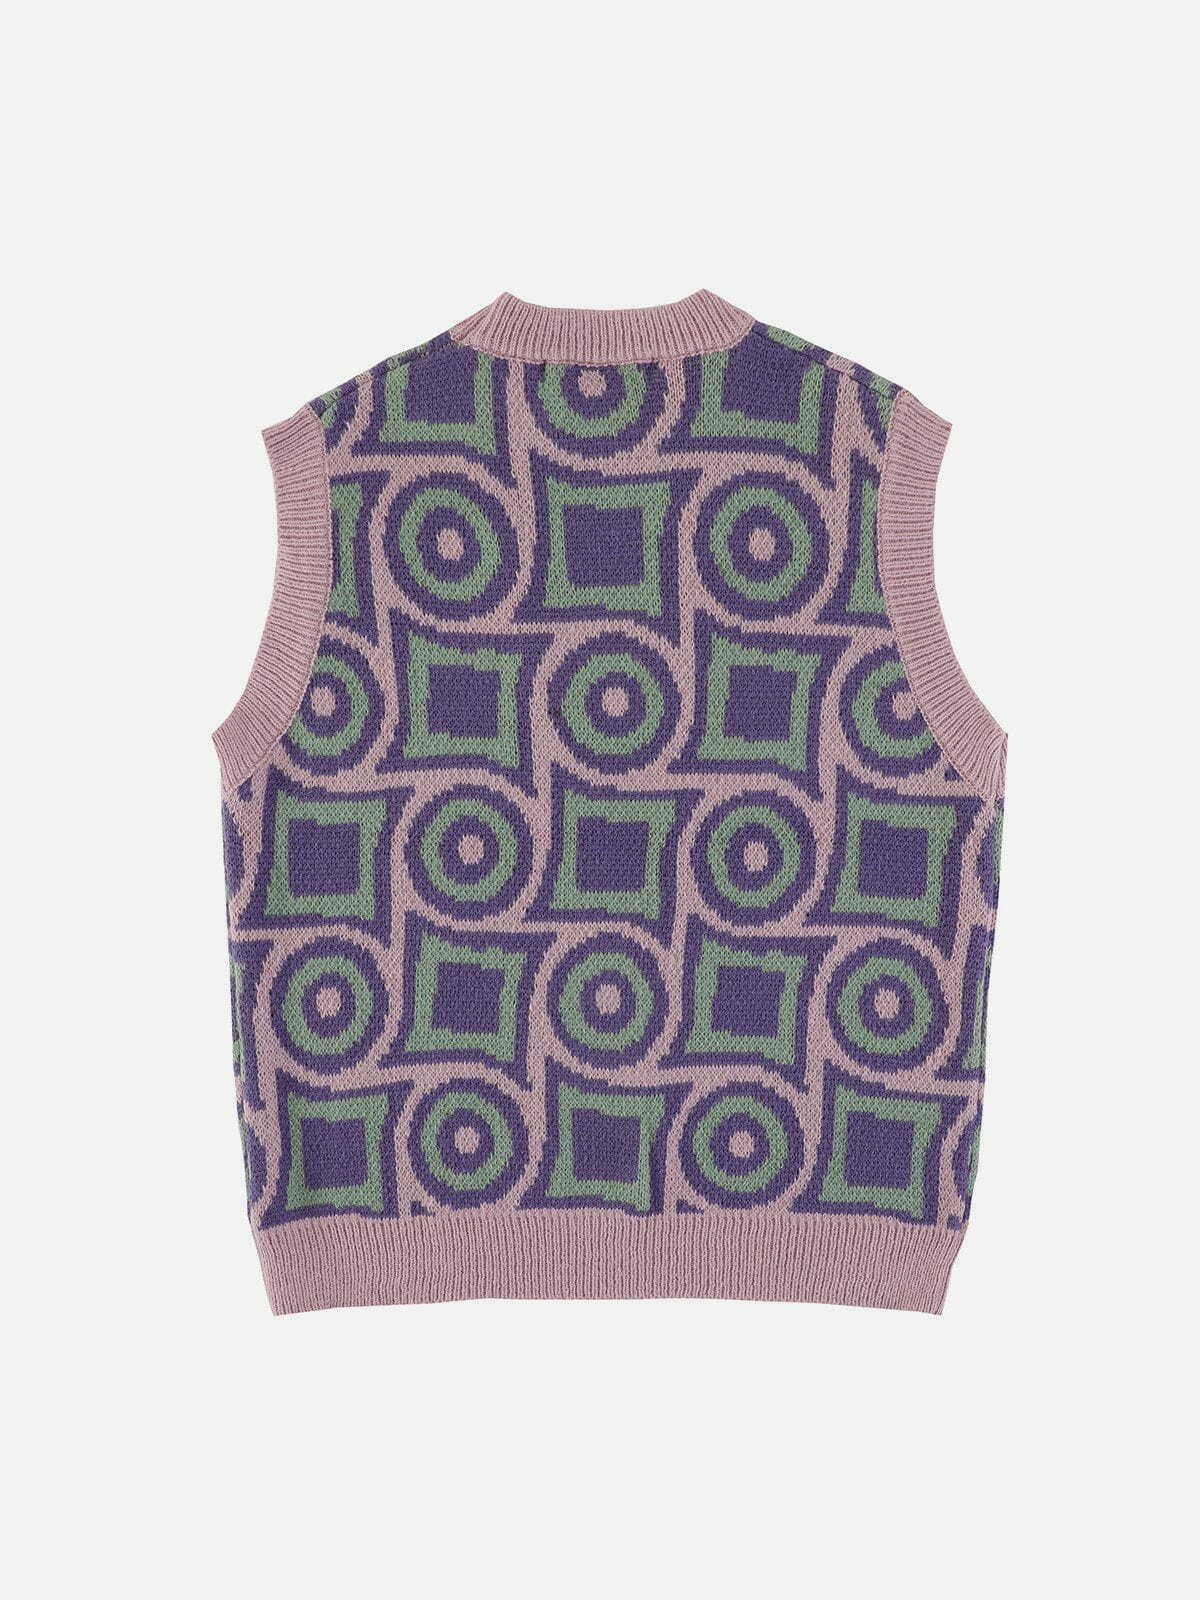 revolutionary geometric sweater vest edgy y2k streetwear essential 4461